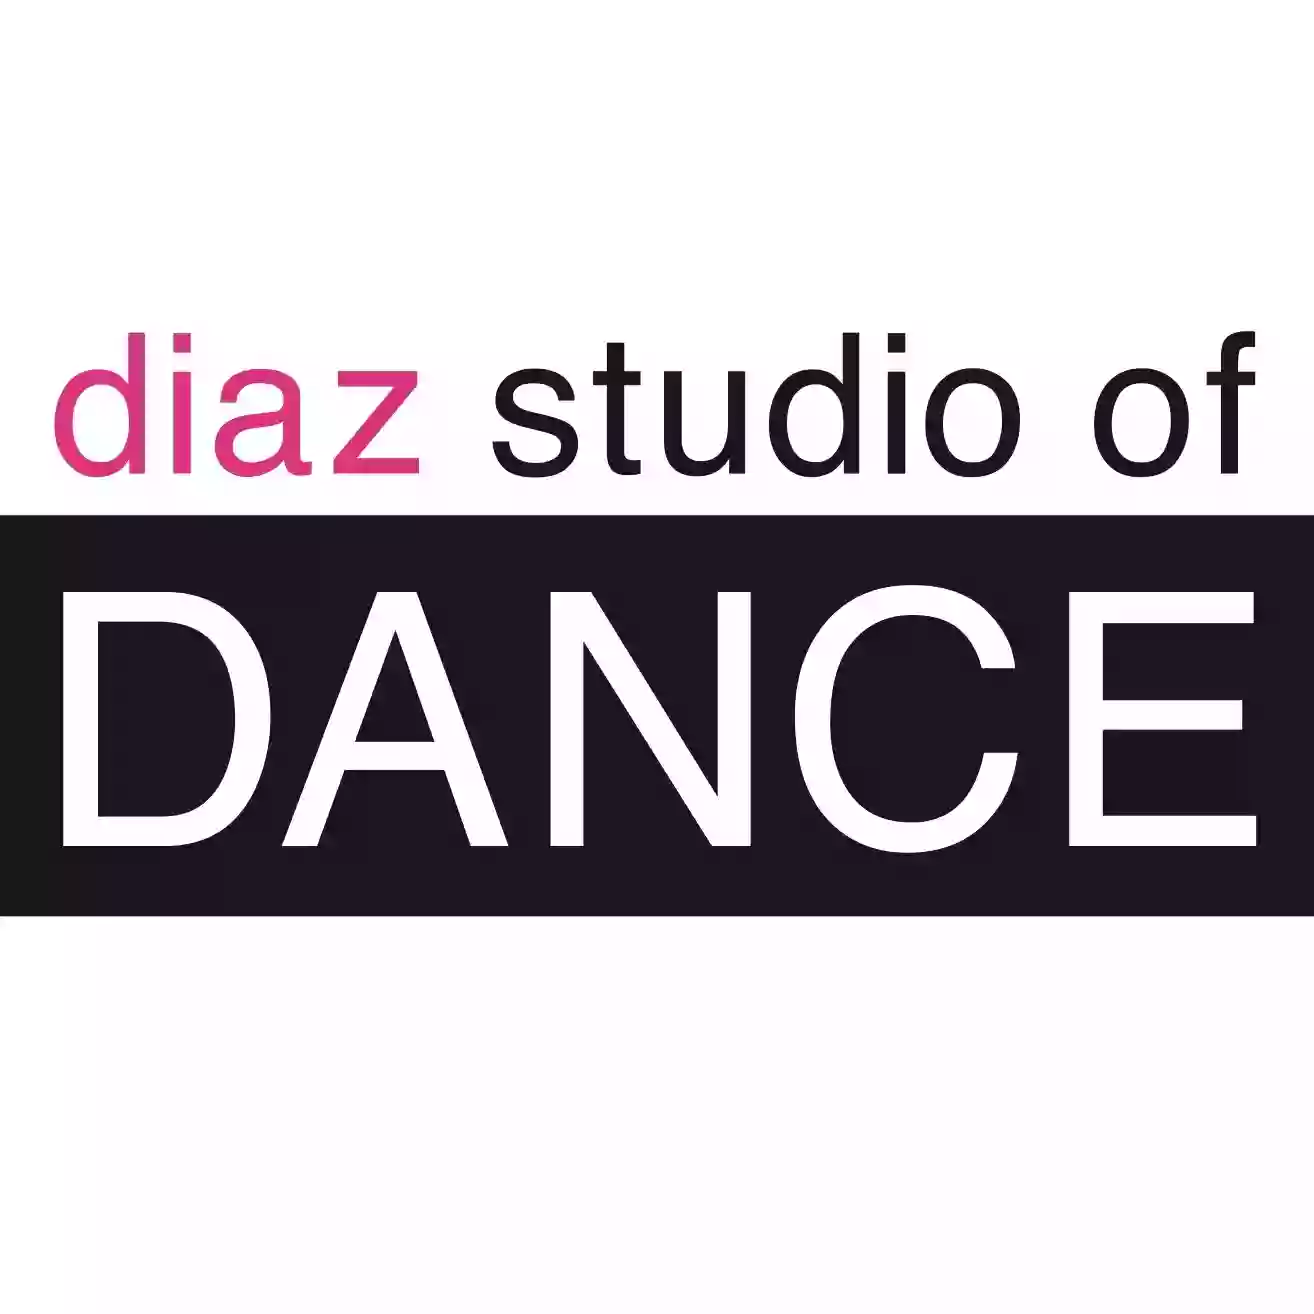 Diaz Studio of Dance